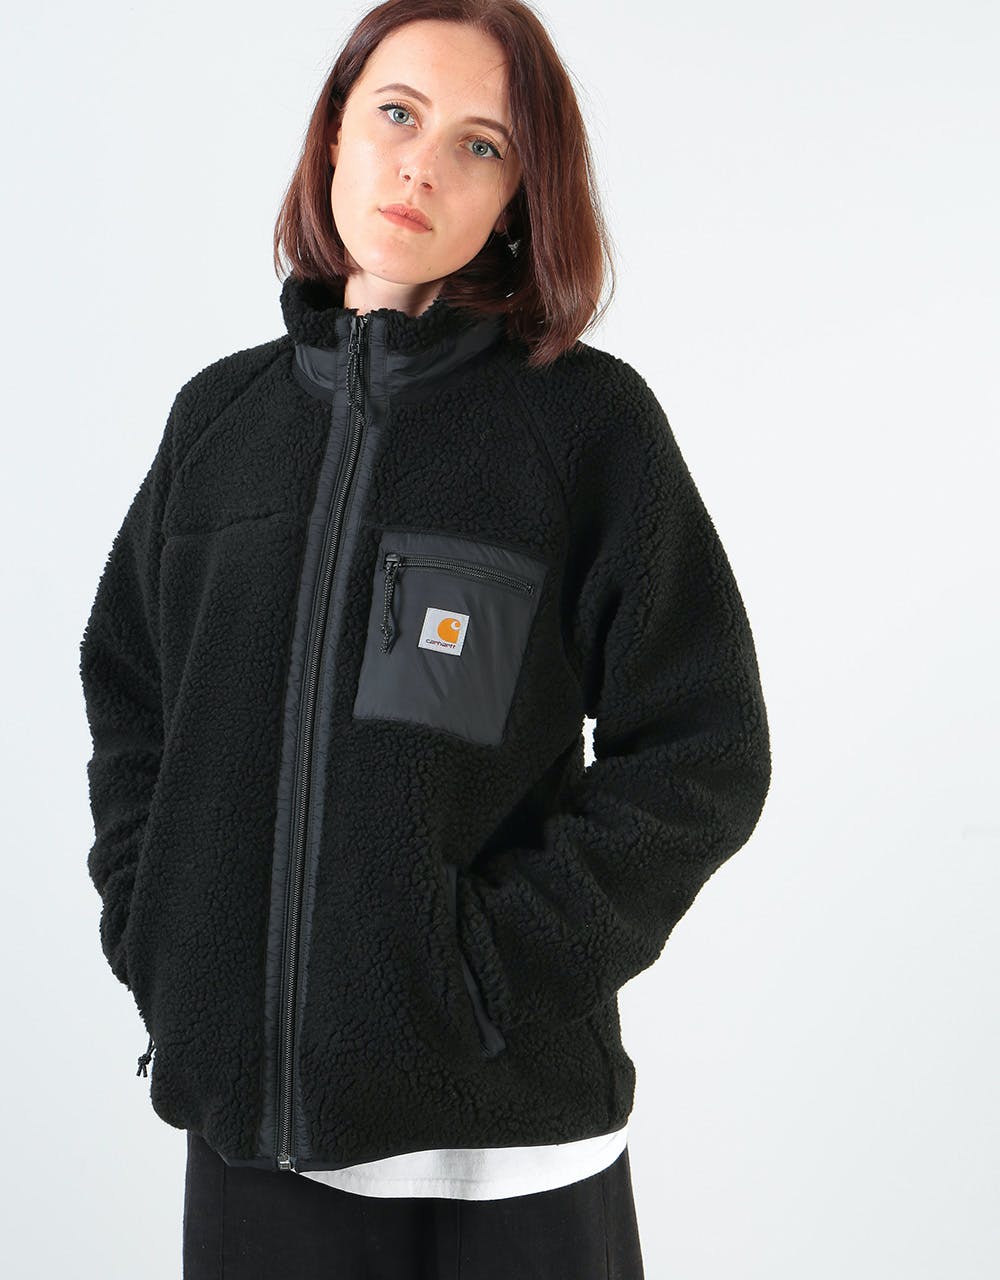 Carhartt WIP Womens Oversized Prentis Liner Jacket - Black